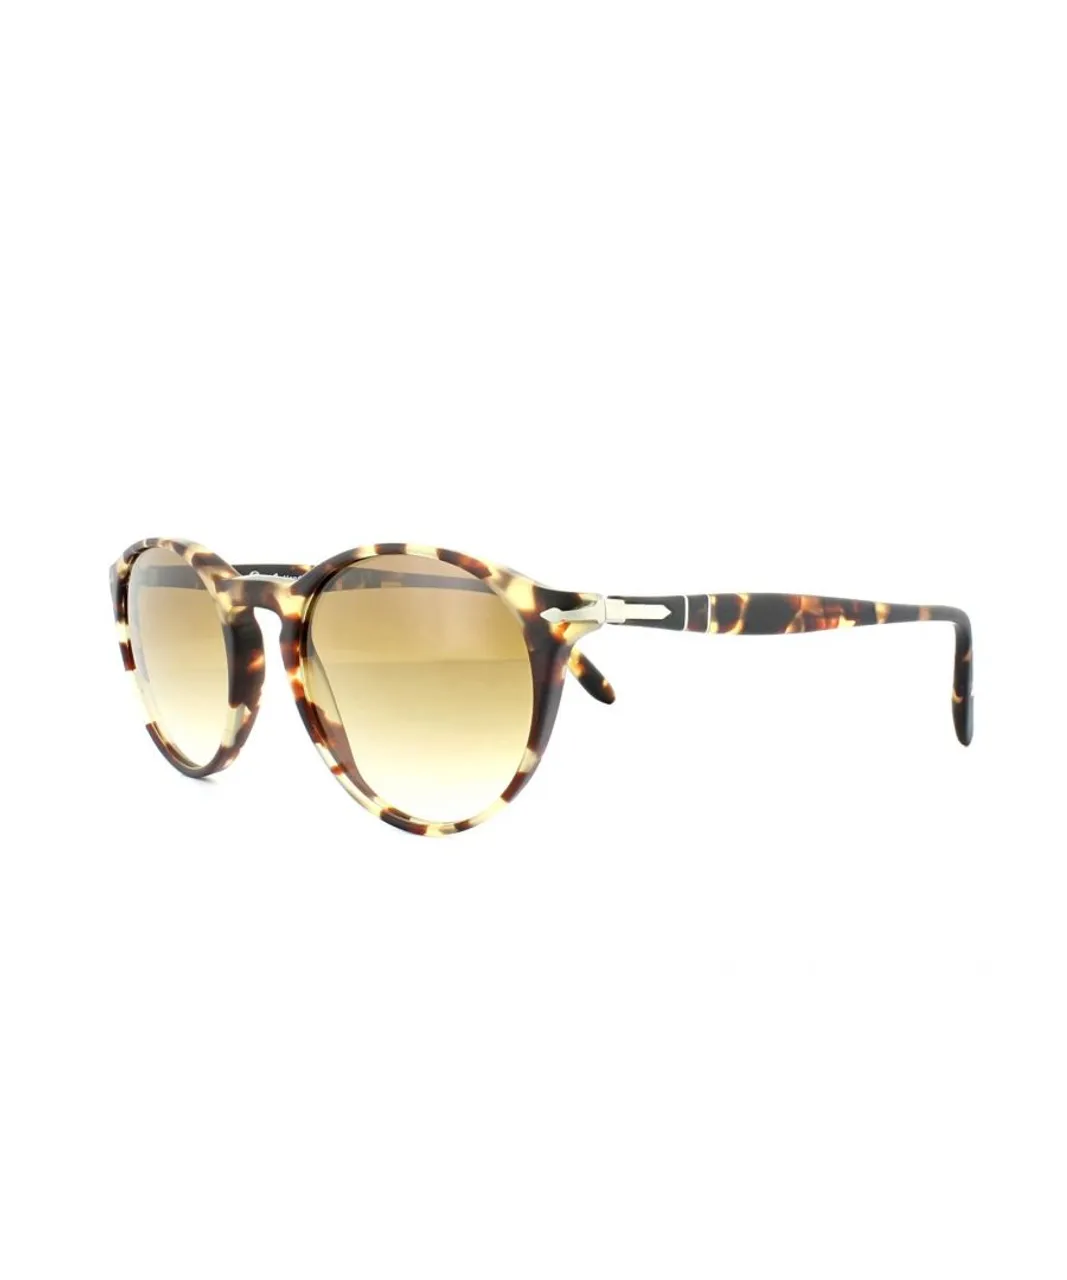 Persol Unisex Sunglasses 3092SM 900551 Tabacco Virginia Antique Brown Gradient - One